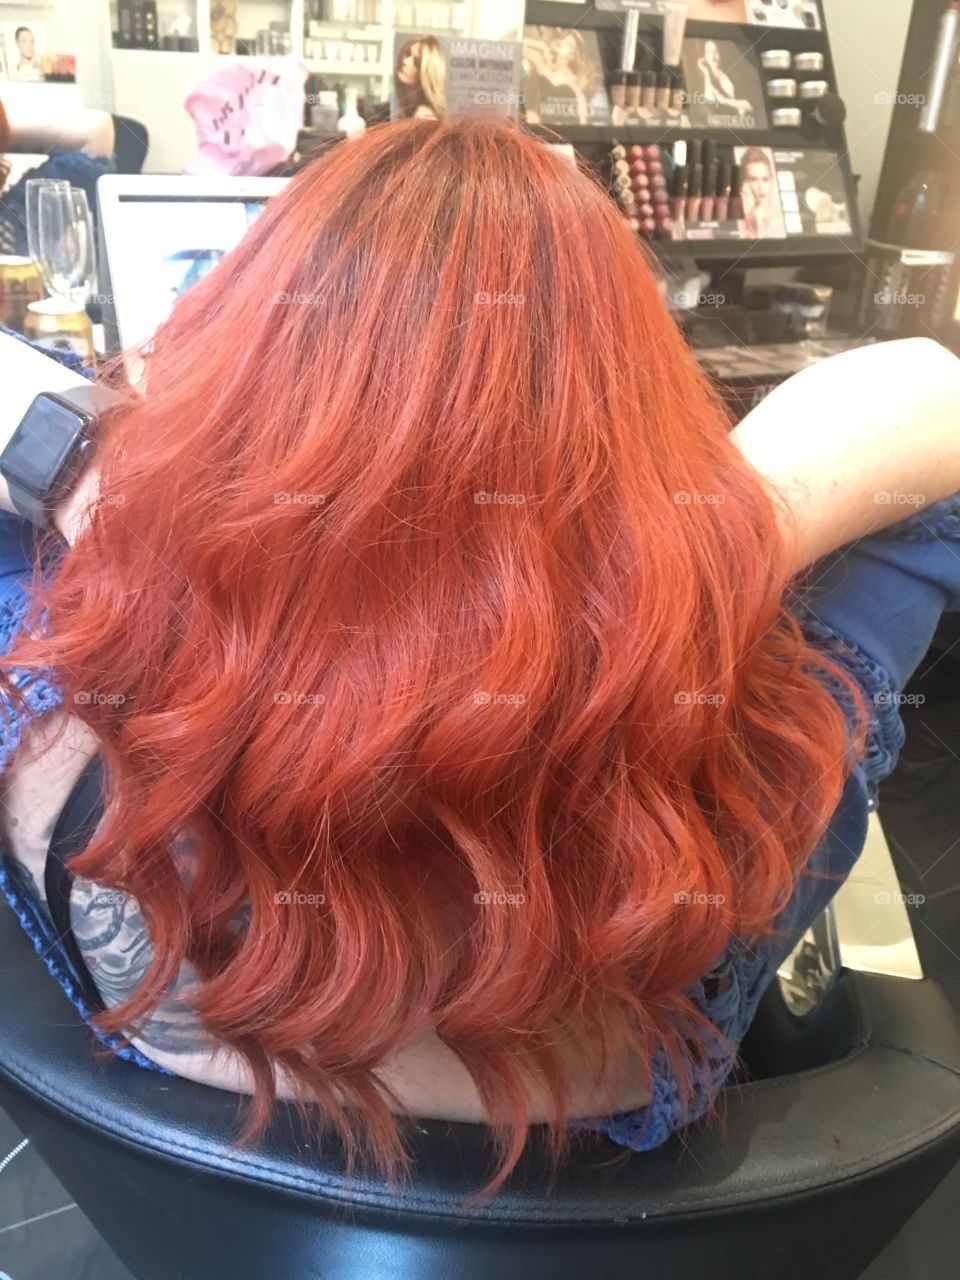 Redhead - Haircoloring at it's best!